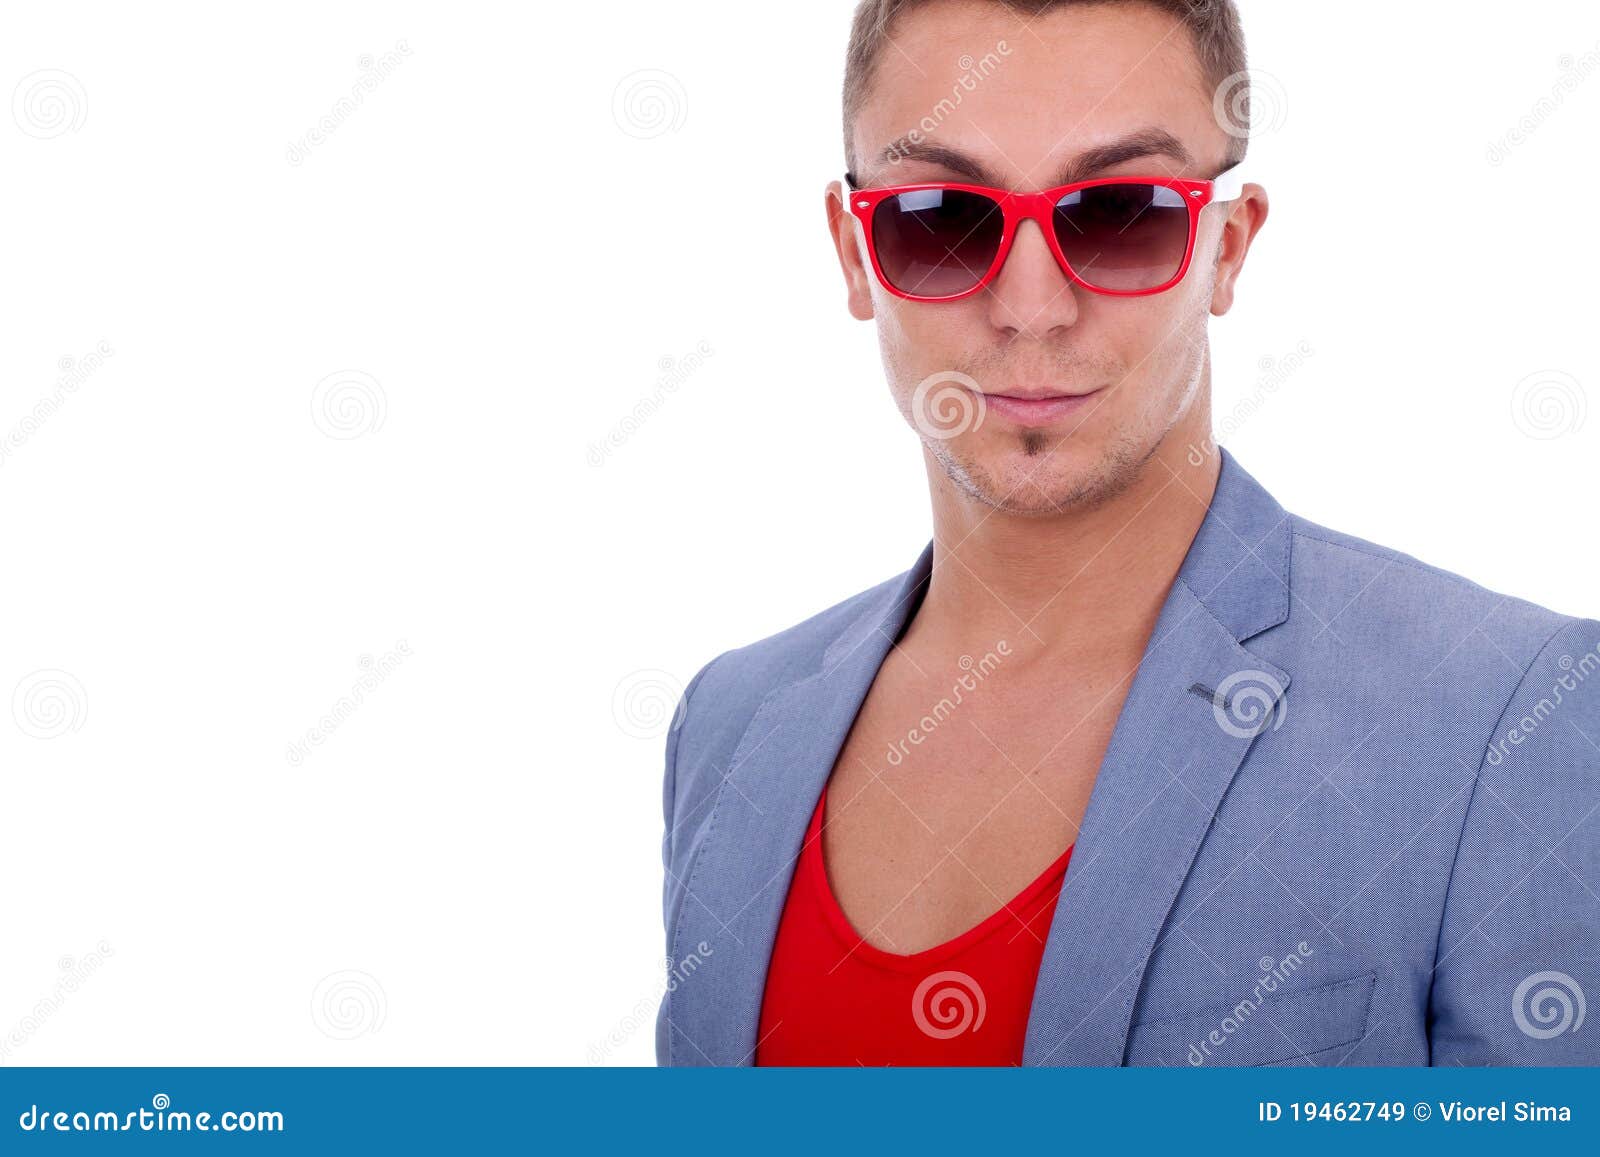 Fashion Man Wearing Red Sunglasses Stock Image - Image of closeup ...